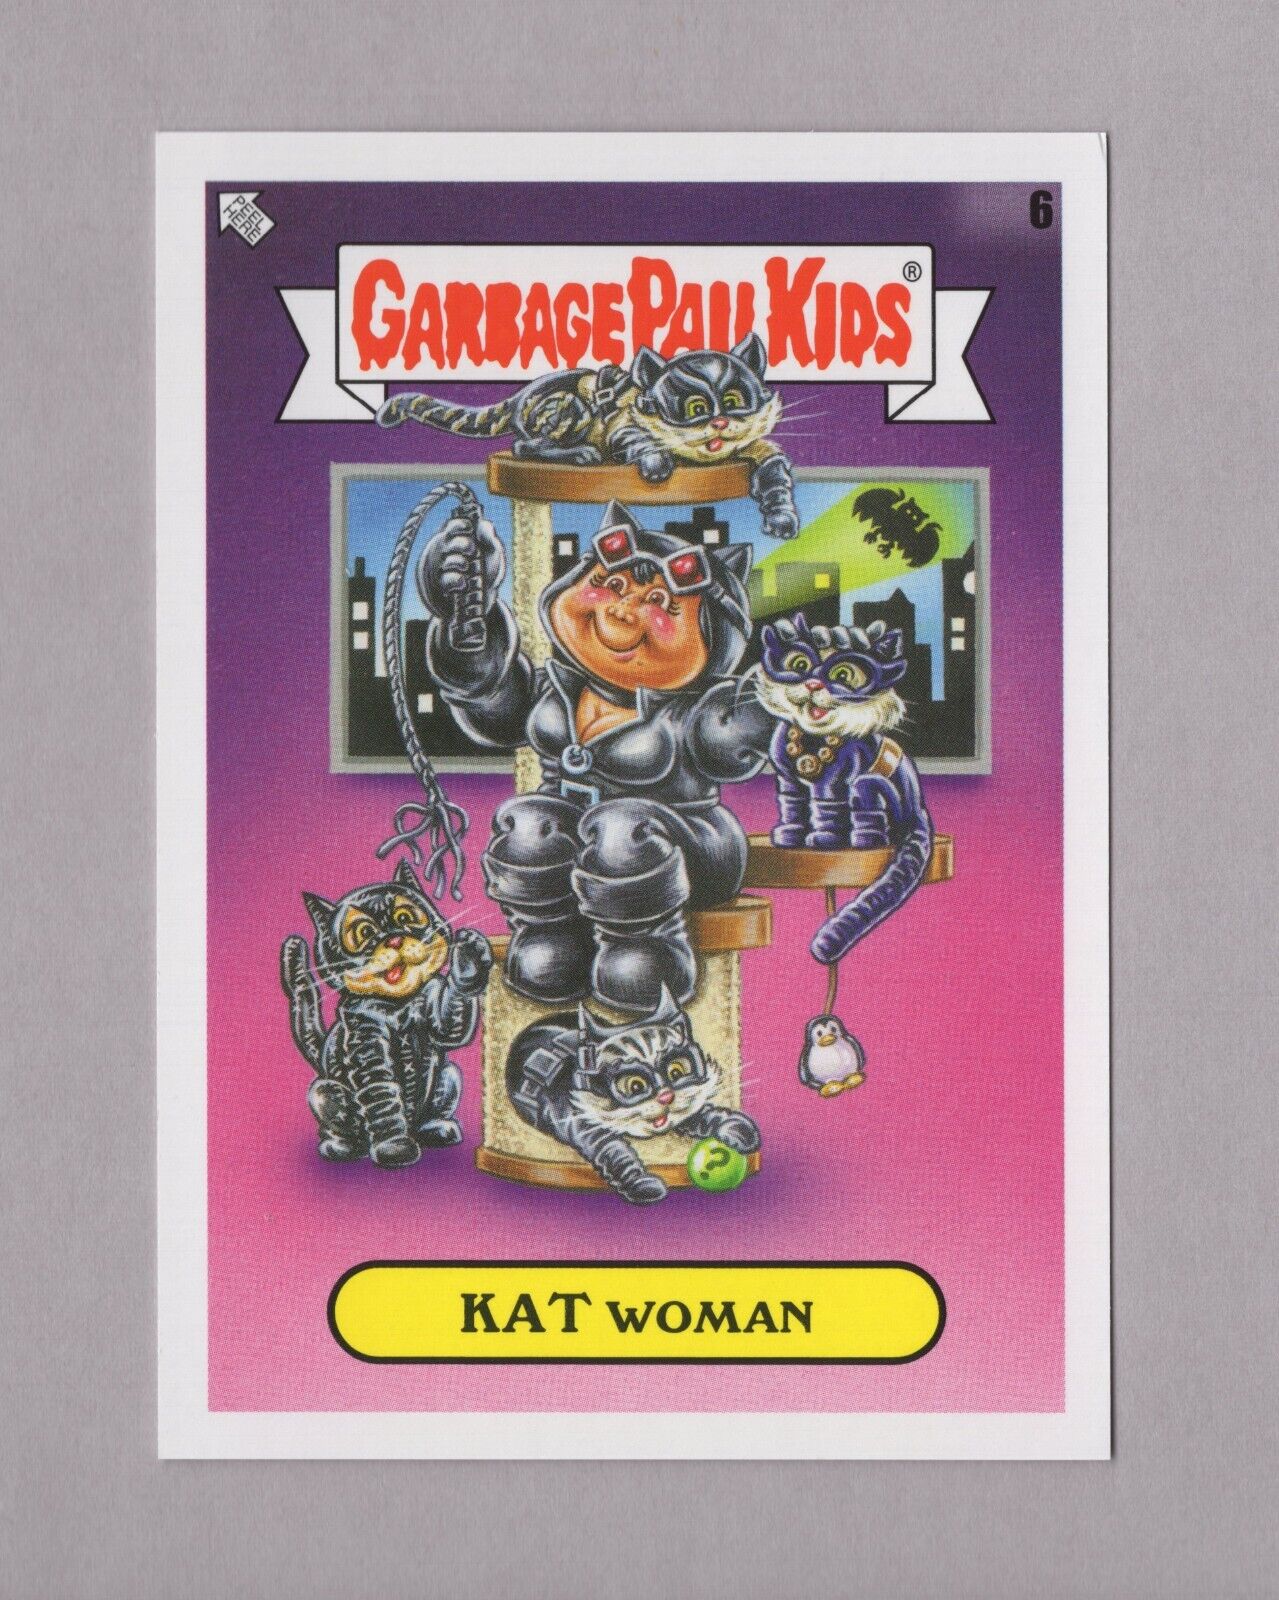 2022 Topps Garbage Pail Kids GPK Book Worms Gross Adaptations Kat Woman #6